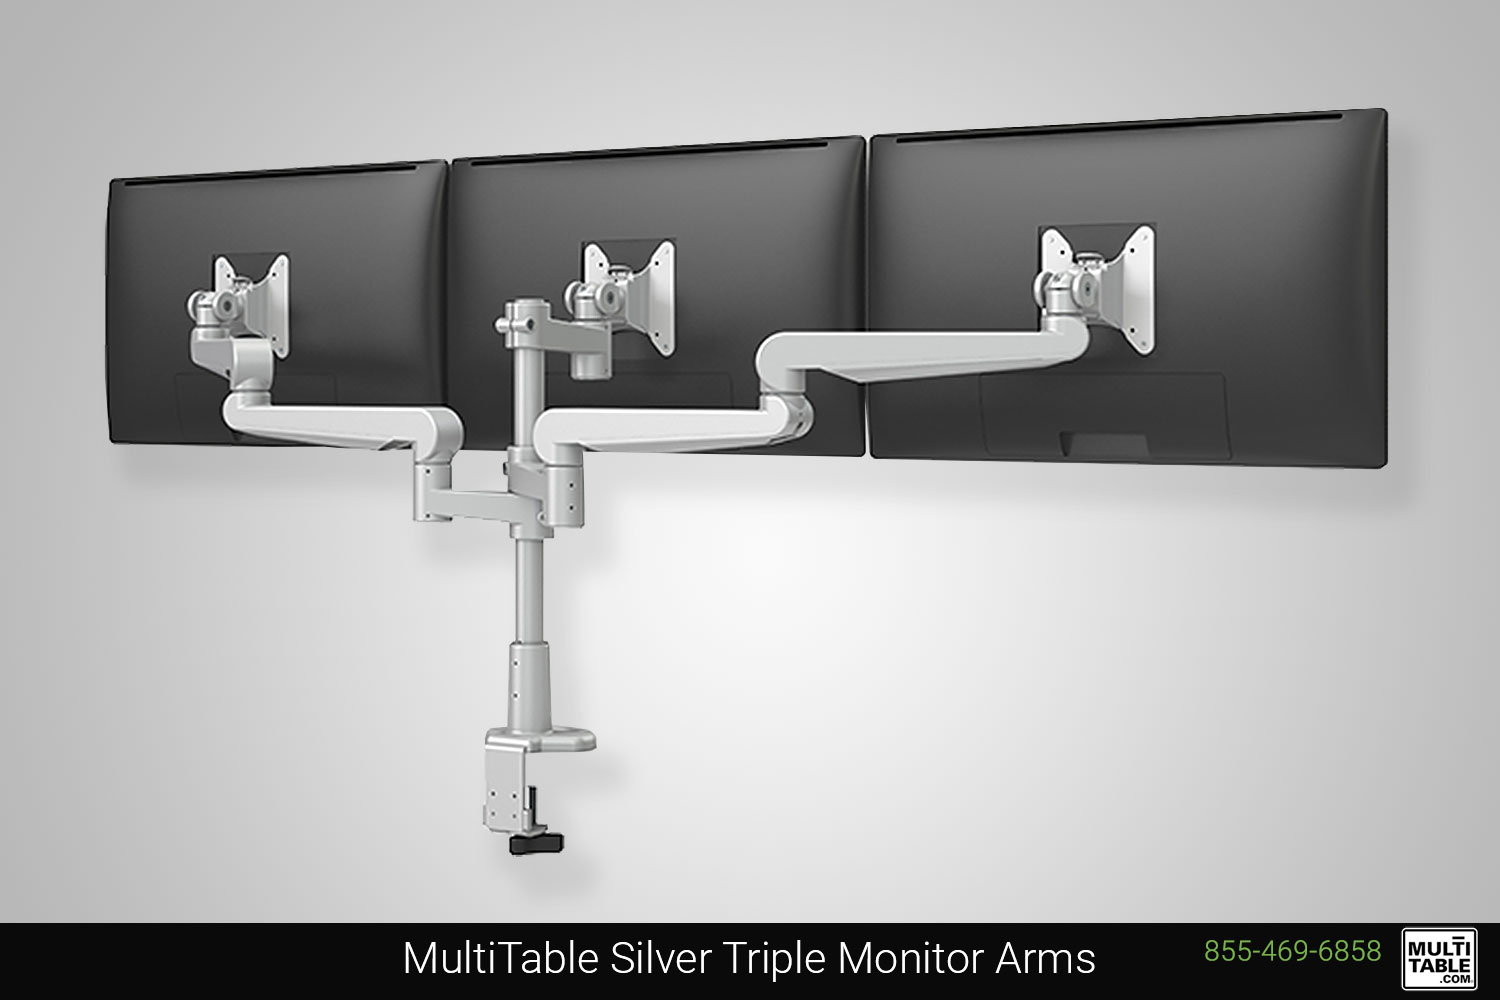 Custom Standing Desk Silver Triple Monitor Arms Ergonomic Accessories MultiTable Office Furniture Manufacturing Phoenix Arizona Since 2010